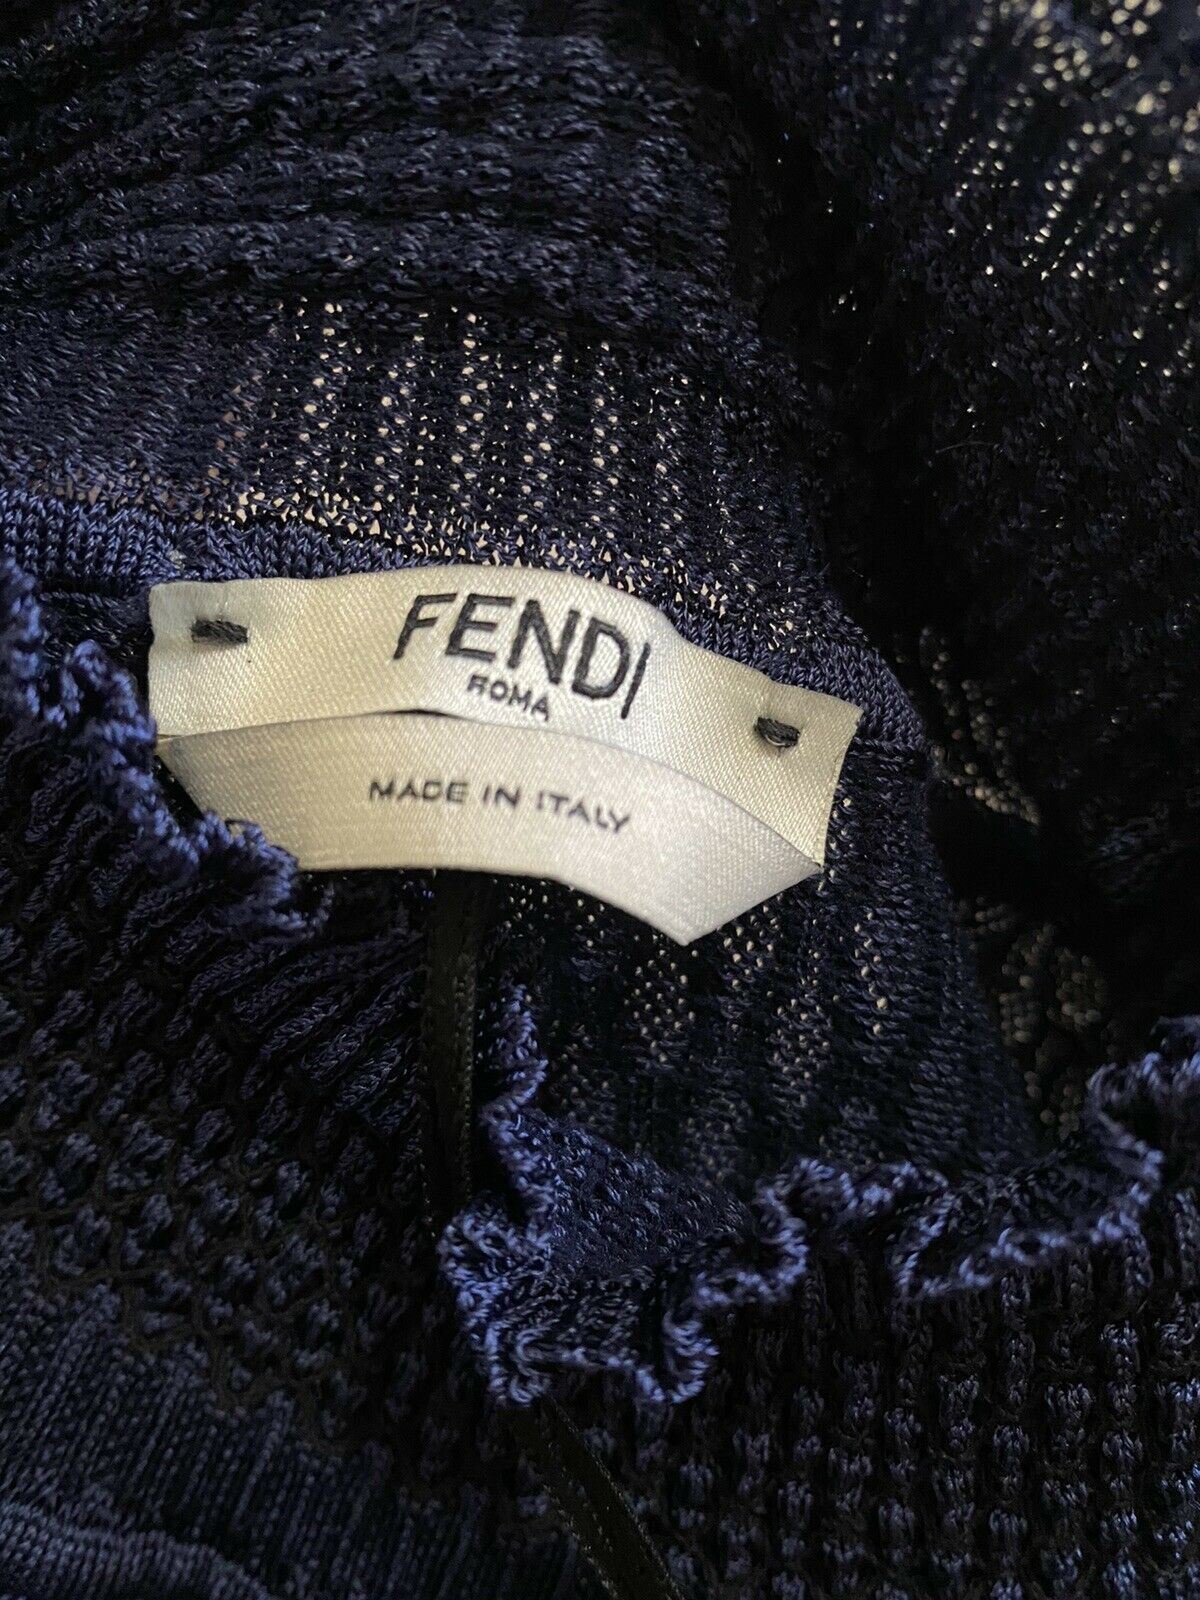 New $2390 Fendi Smocked Silk Crepe Turtleneck Dress Navy 12 US/48 It Italy